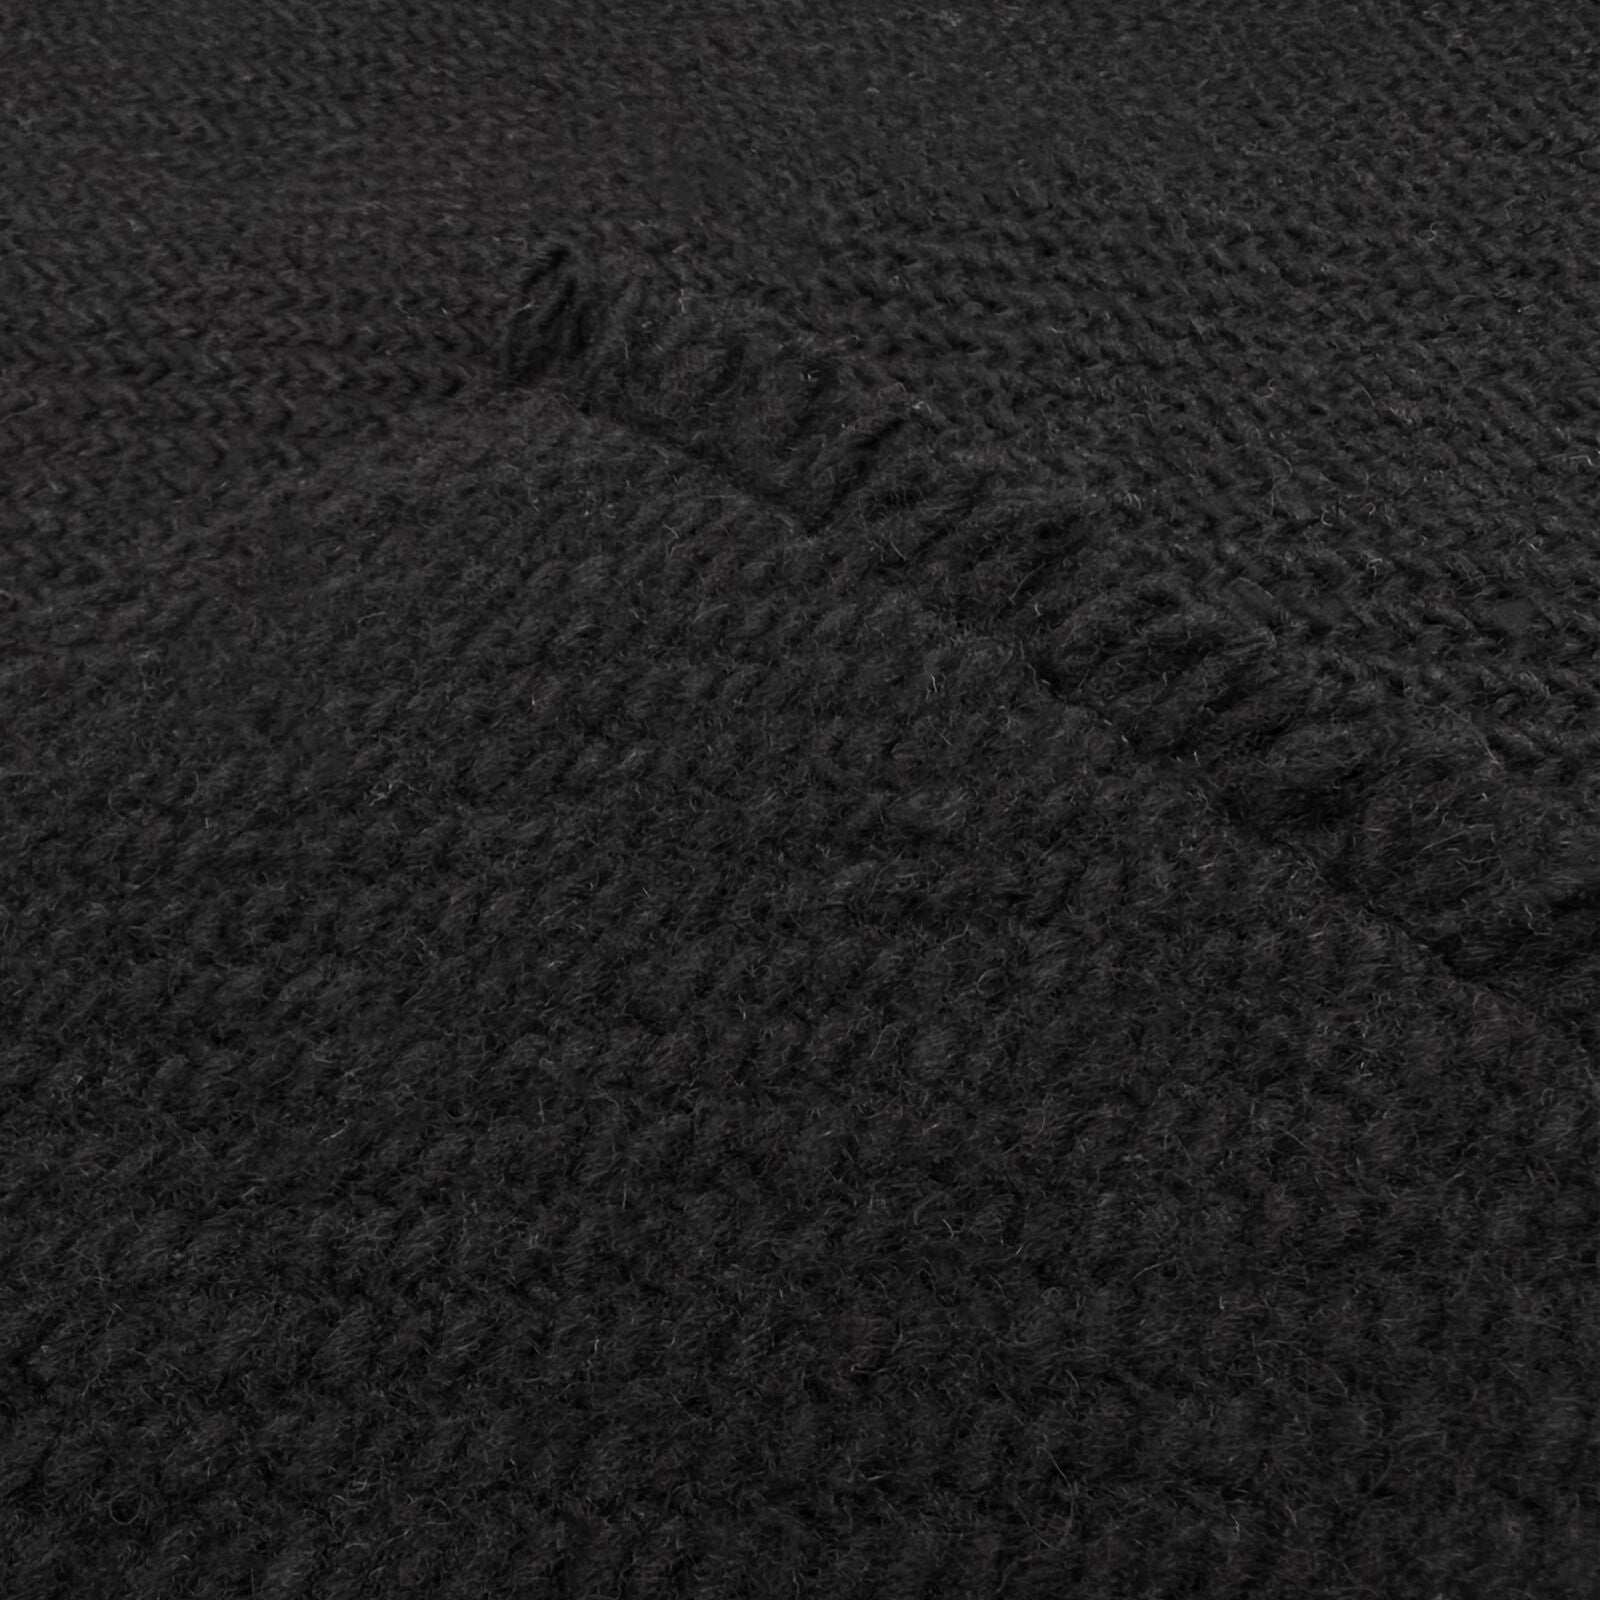 Llama Wool Unisex South American Handwoven Poncho XL - solid black pattern